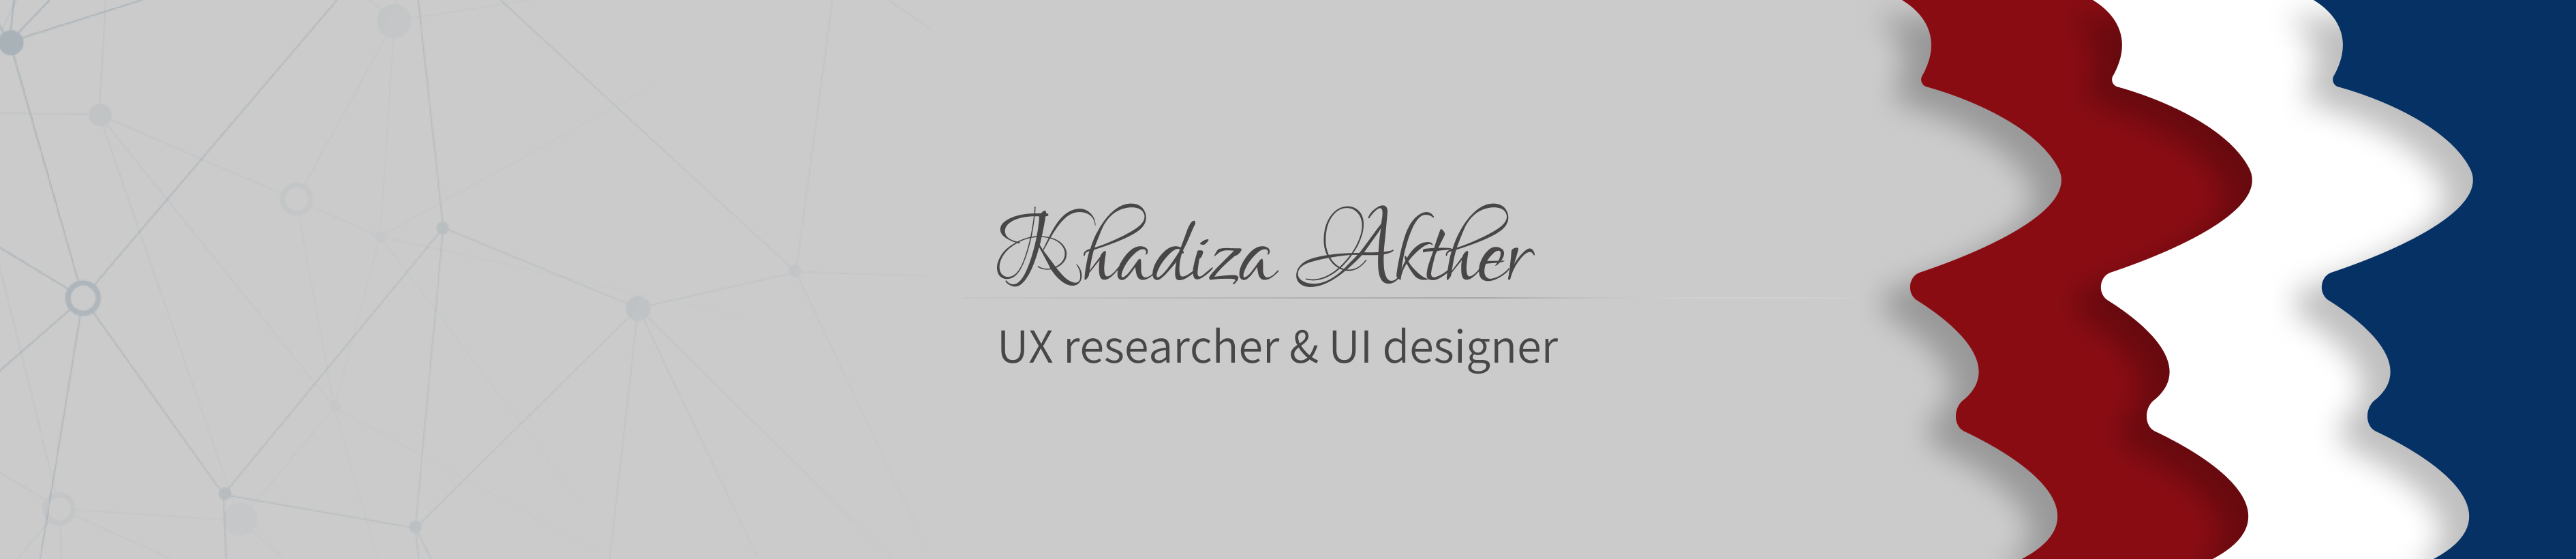 Khadiza Akther's profile banner